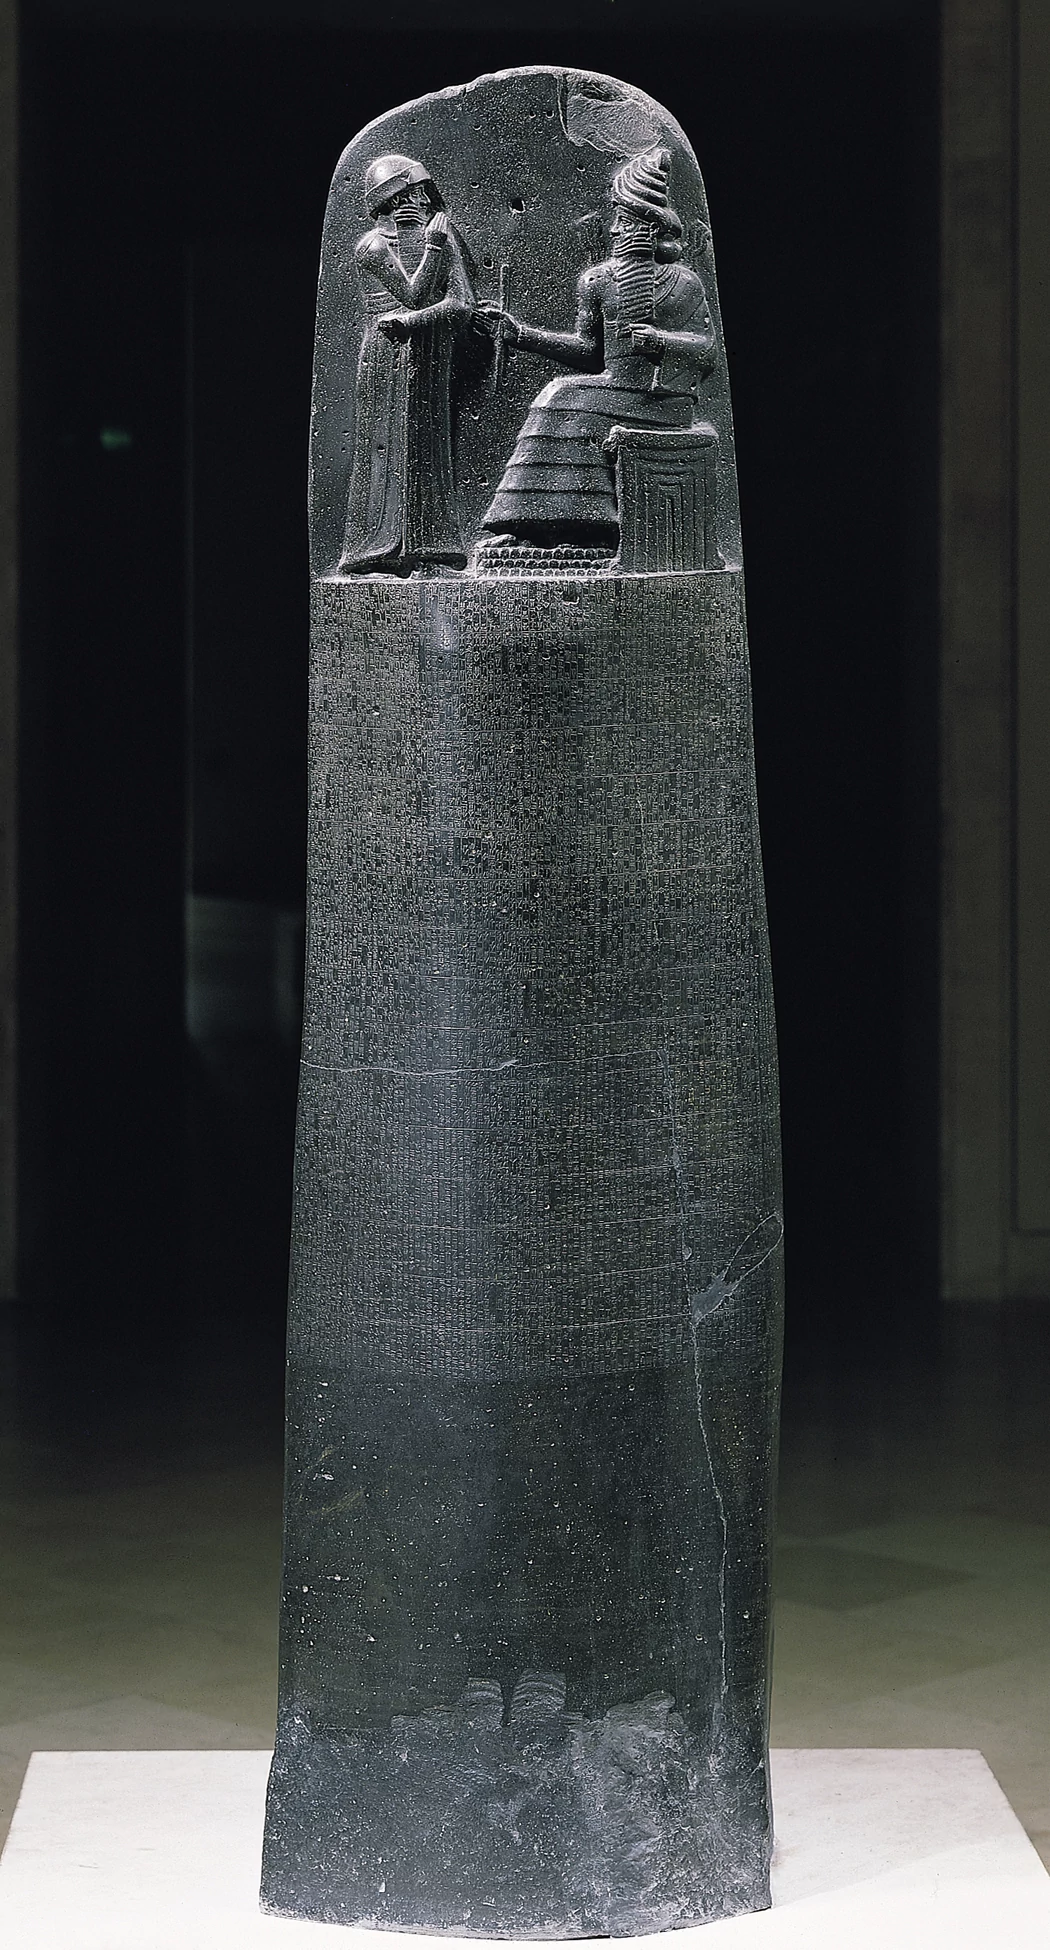 Law Code of Hammurabi, Mesopotamia